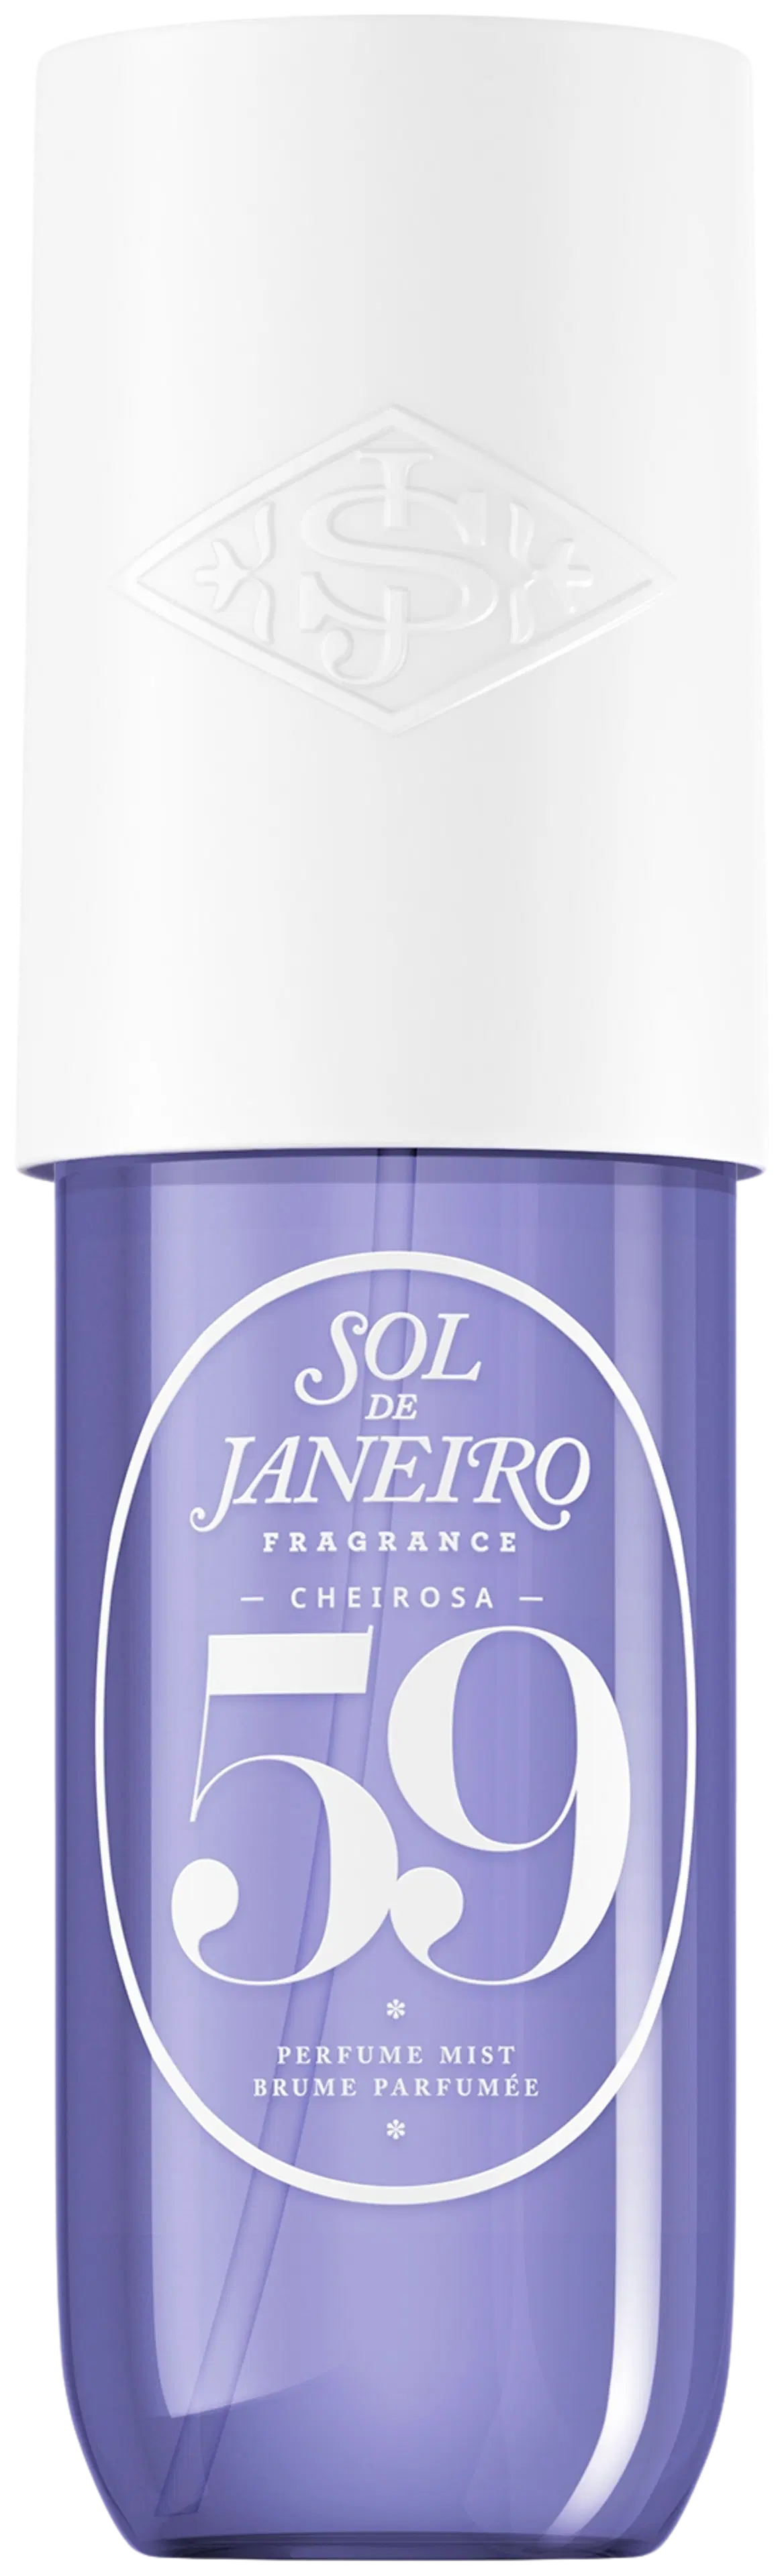 Sol de Janeiro Cheirosa 59 Perfume Mist vartalosuihke 90 ml